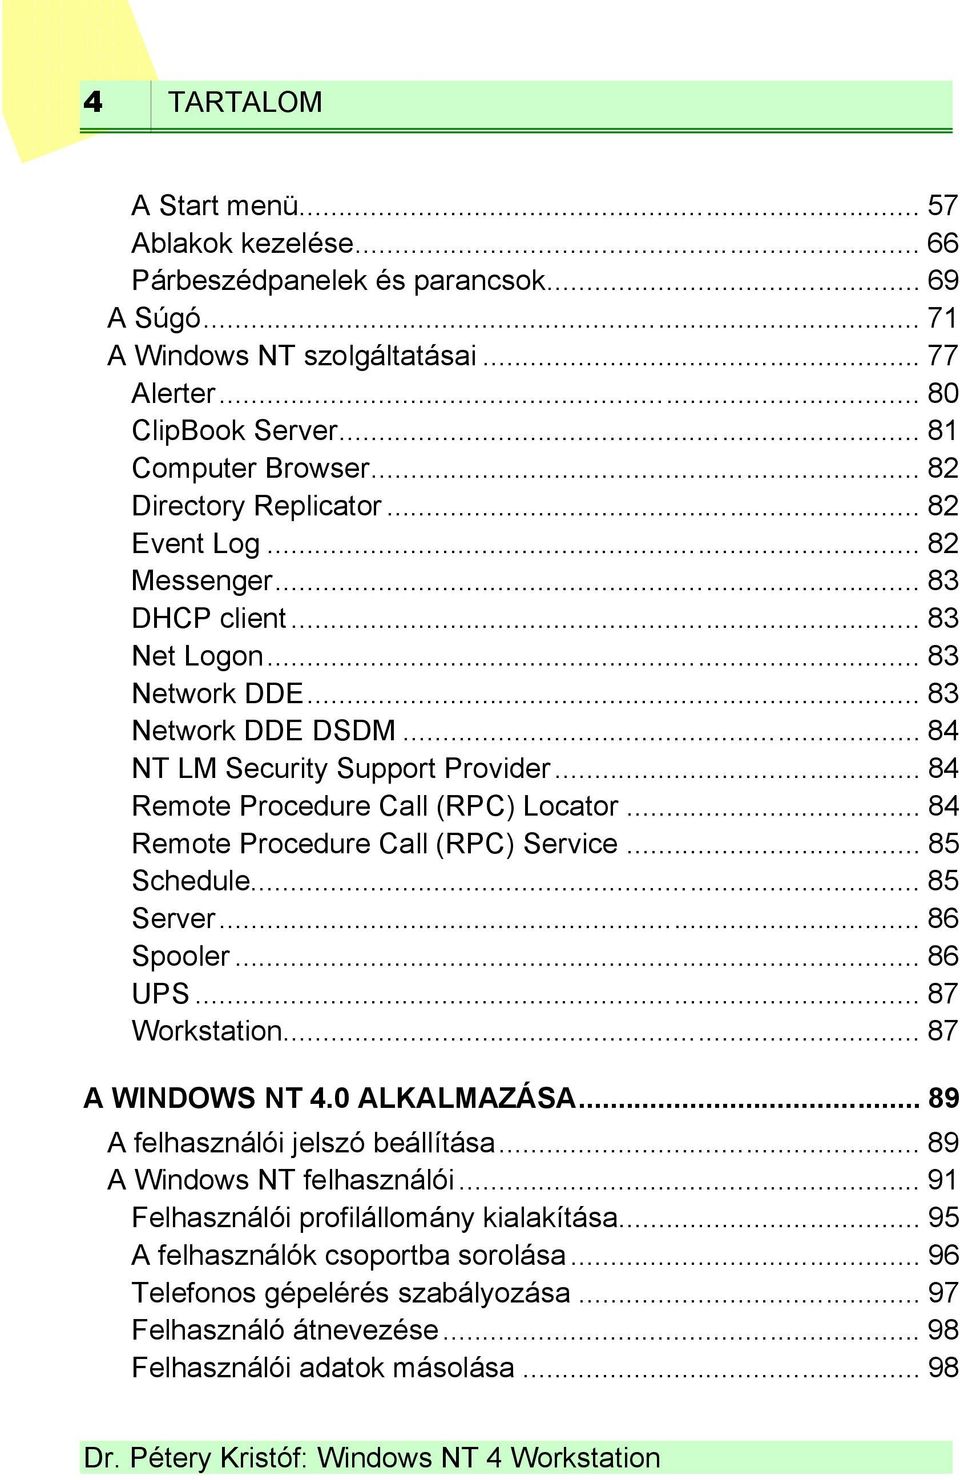 .. 84 Remote Procedure Call (RPC) Locator... 84 Remote Procedure Call (RPC) Service... 85 Schedule... 85 Server... 86 Spooler... 86 UPS... 87 Workstation... 87 A WINDOWS NT 4.0 ALKALMAZÁSA.